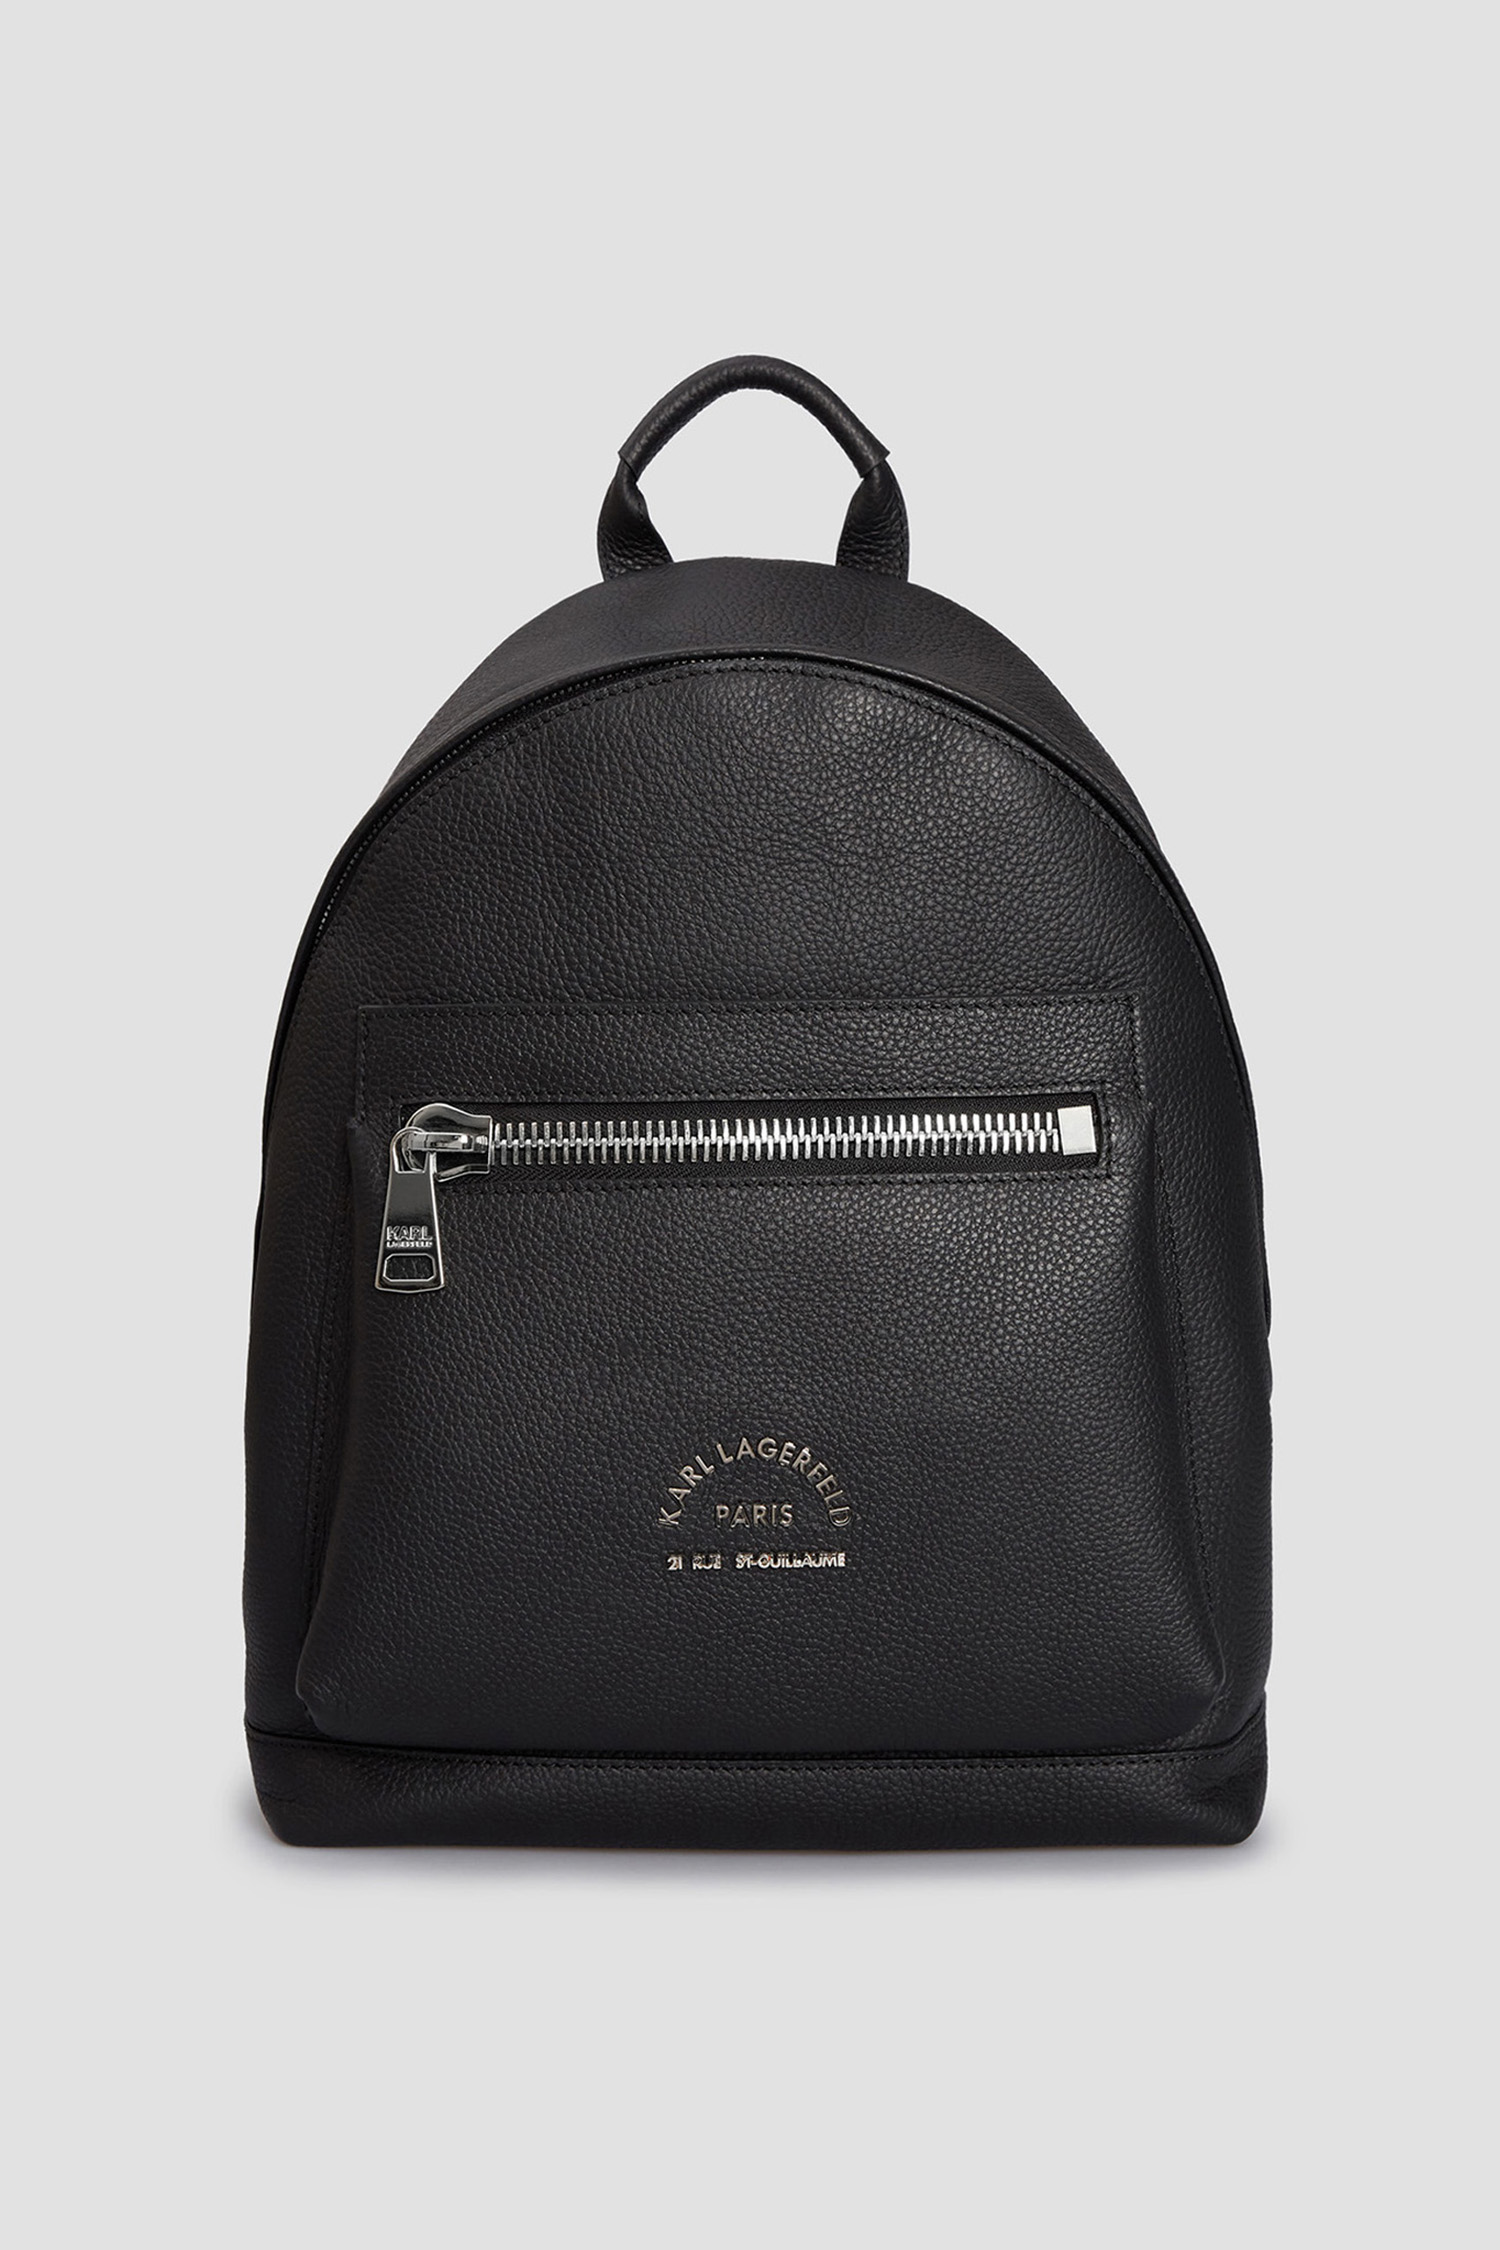 Черный кожаный рюкзак для парней Karl Lagerfeld 511451.815908;990